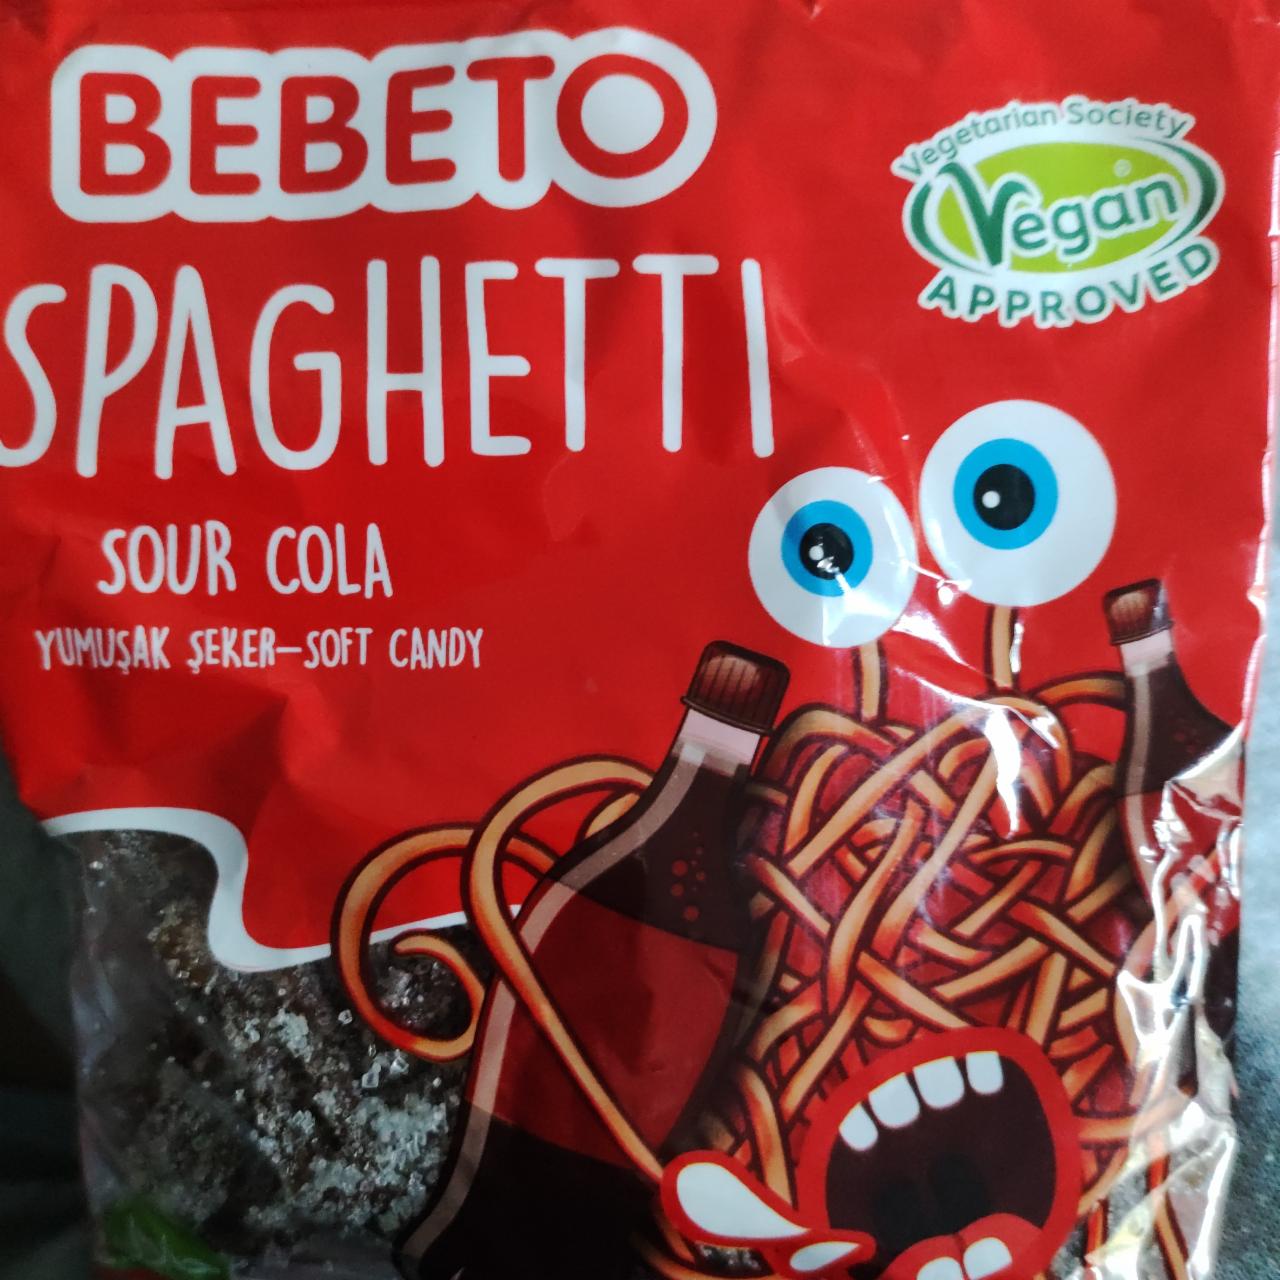 Zdjęcia - Spaghetti Sour Cola Bebeto